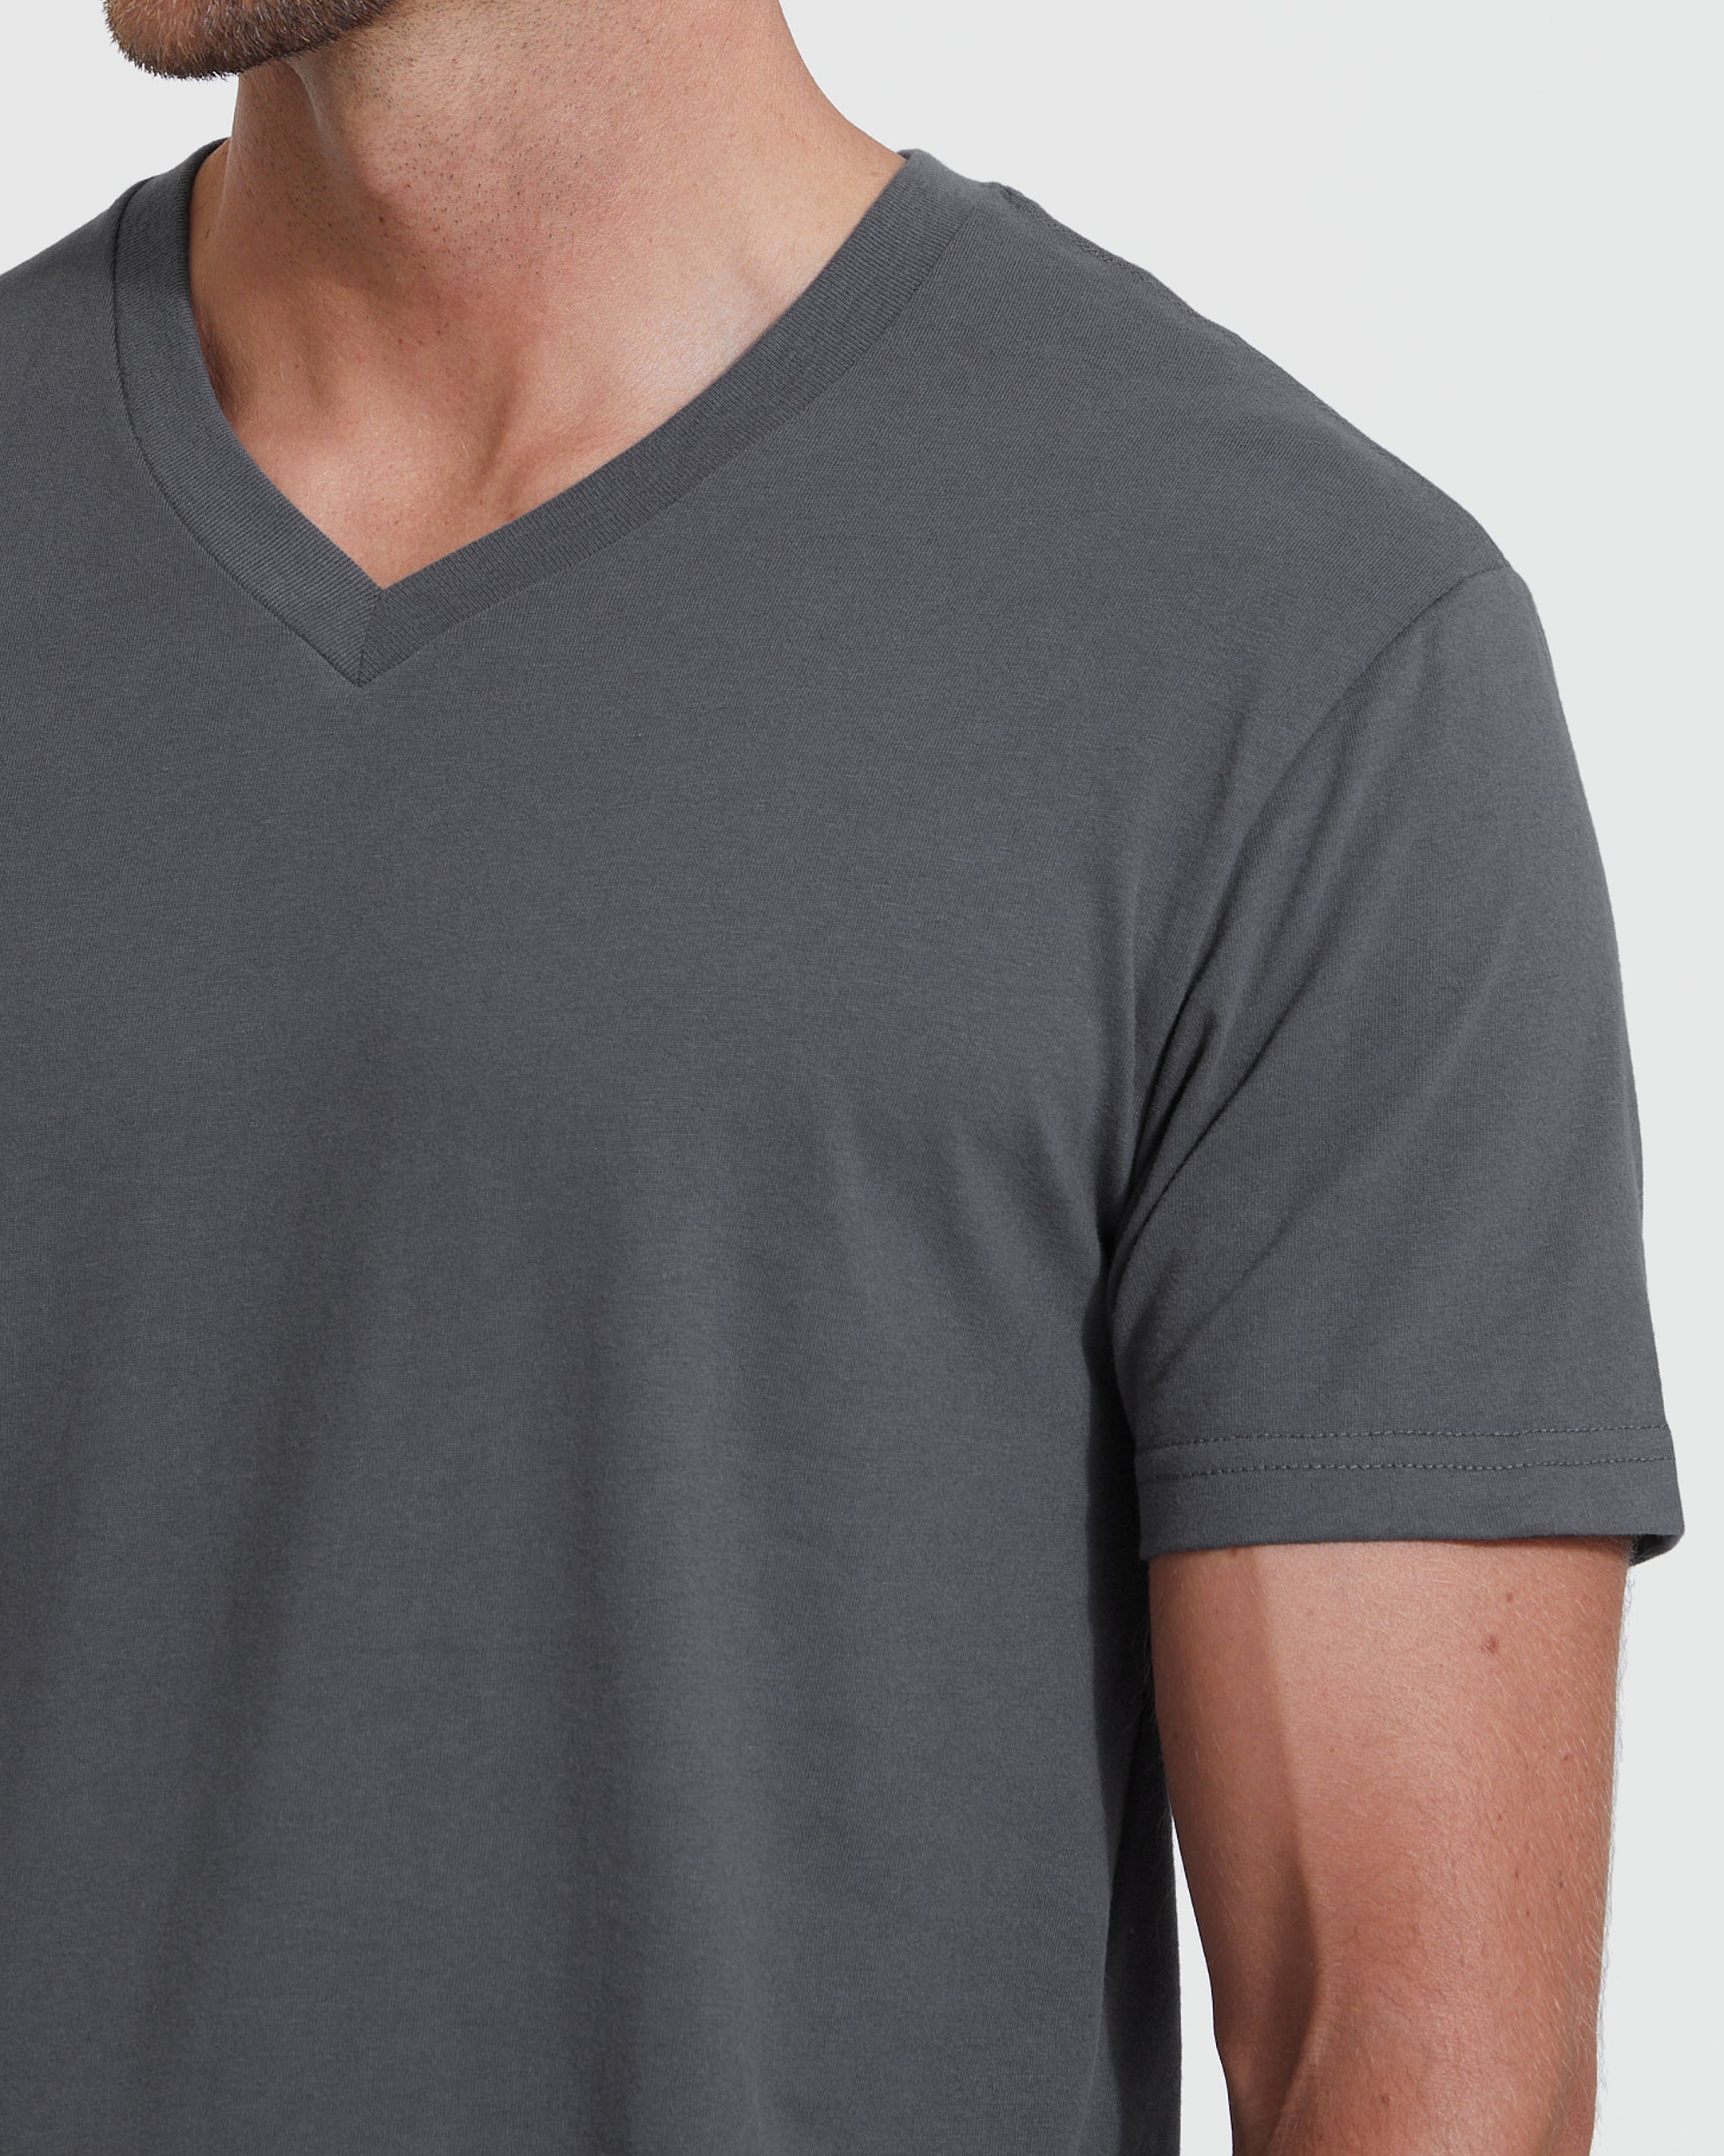 – Classic Carbon T-Shirt V-Neck True